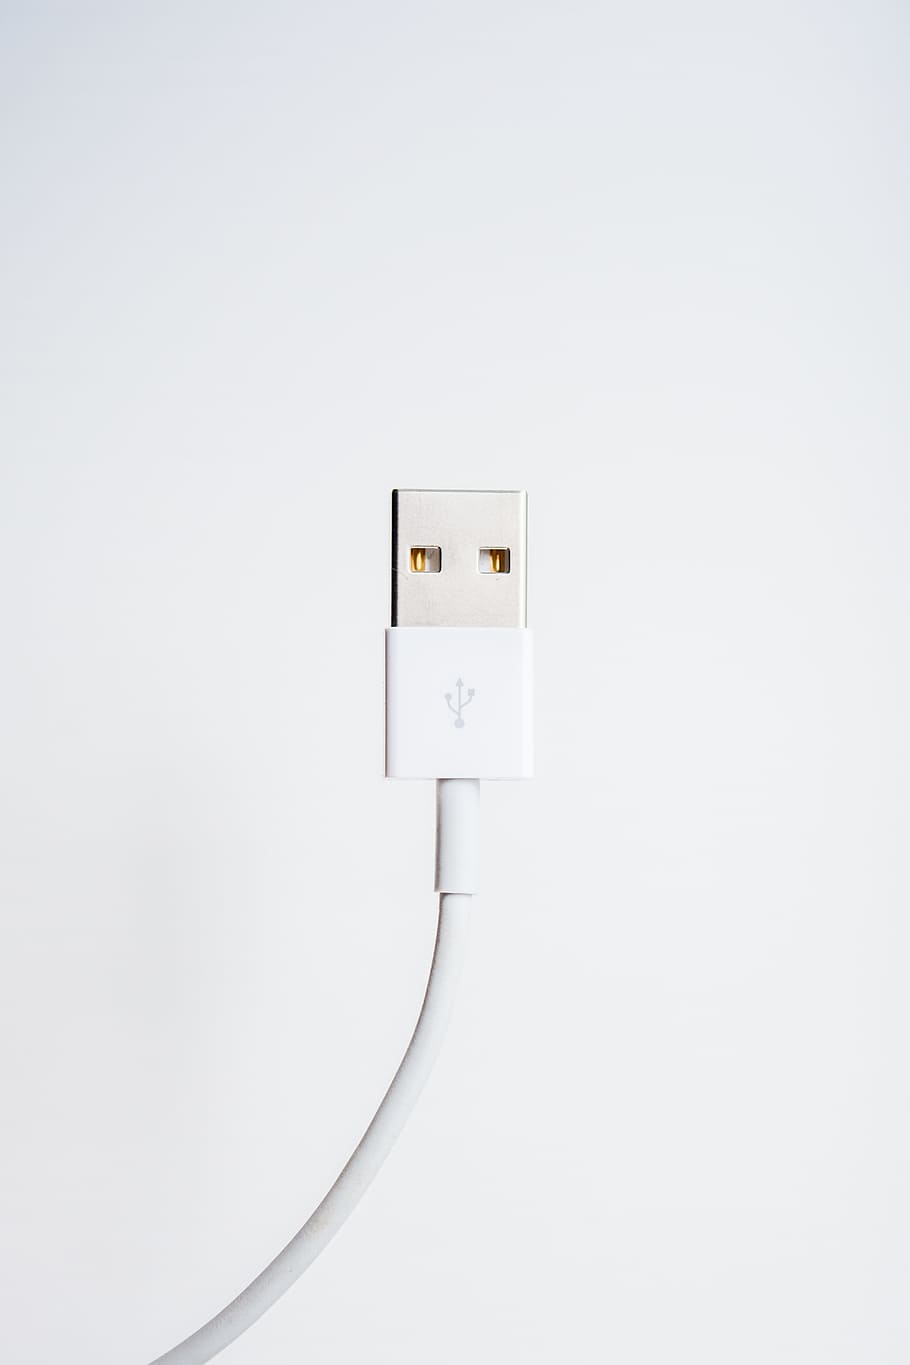 usb putih minimal, Putih, USB, Minimal, teknologi, listrik, outlet, kabel, saluran listrik, colokan listrik